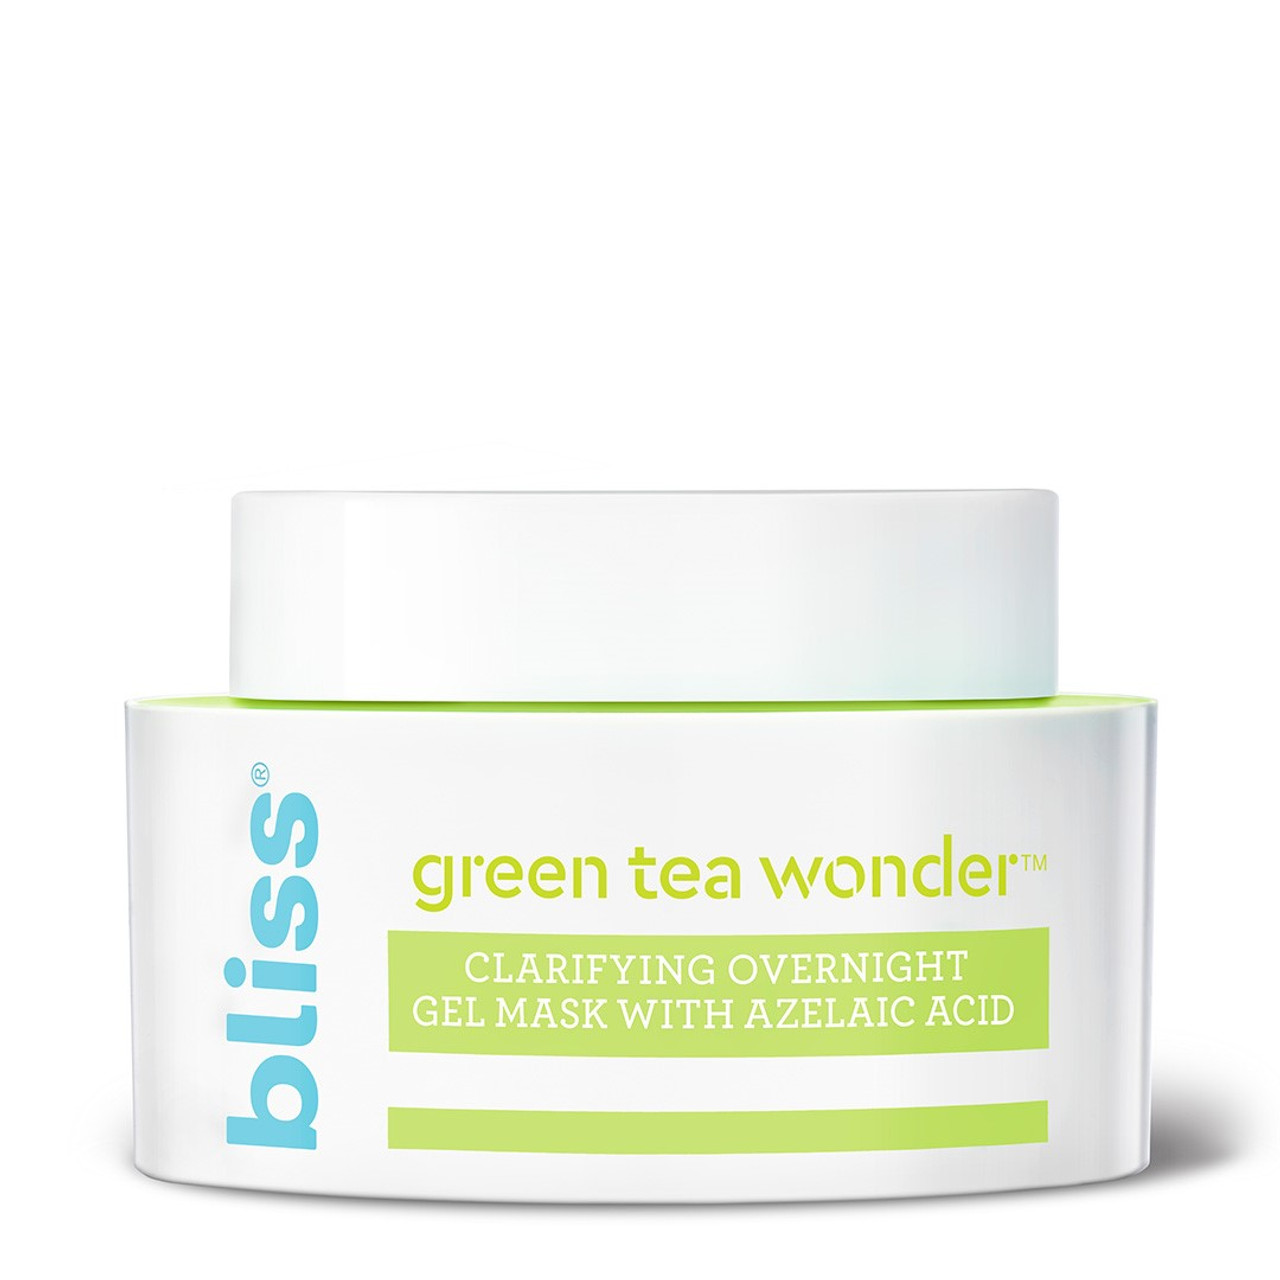 Bliss Green Tea Wonder Clarifying Overnight Gel Mask With Azelaic Acid